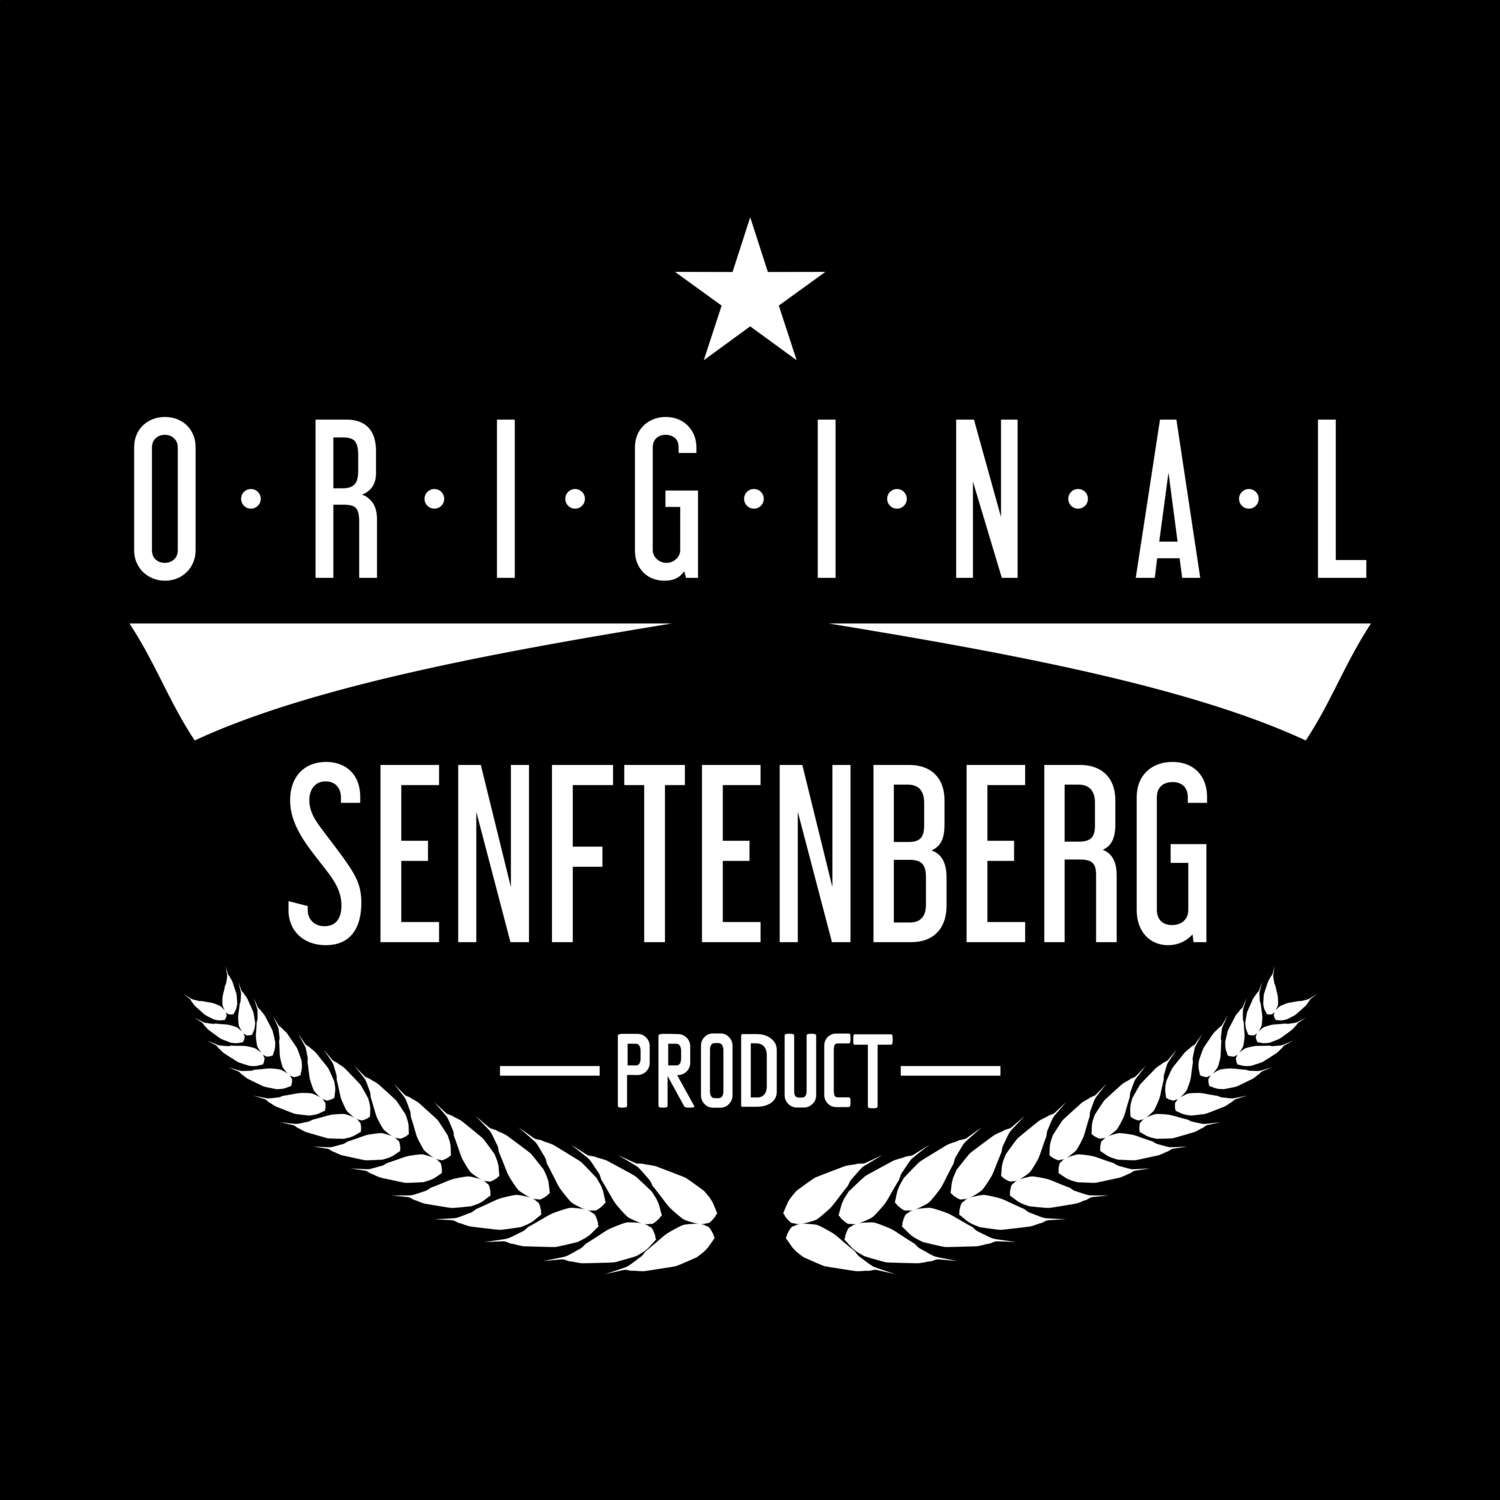 Senftenberg T-Shirt »Original Product«